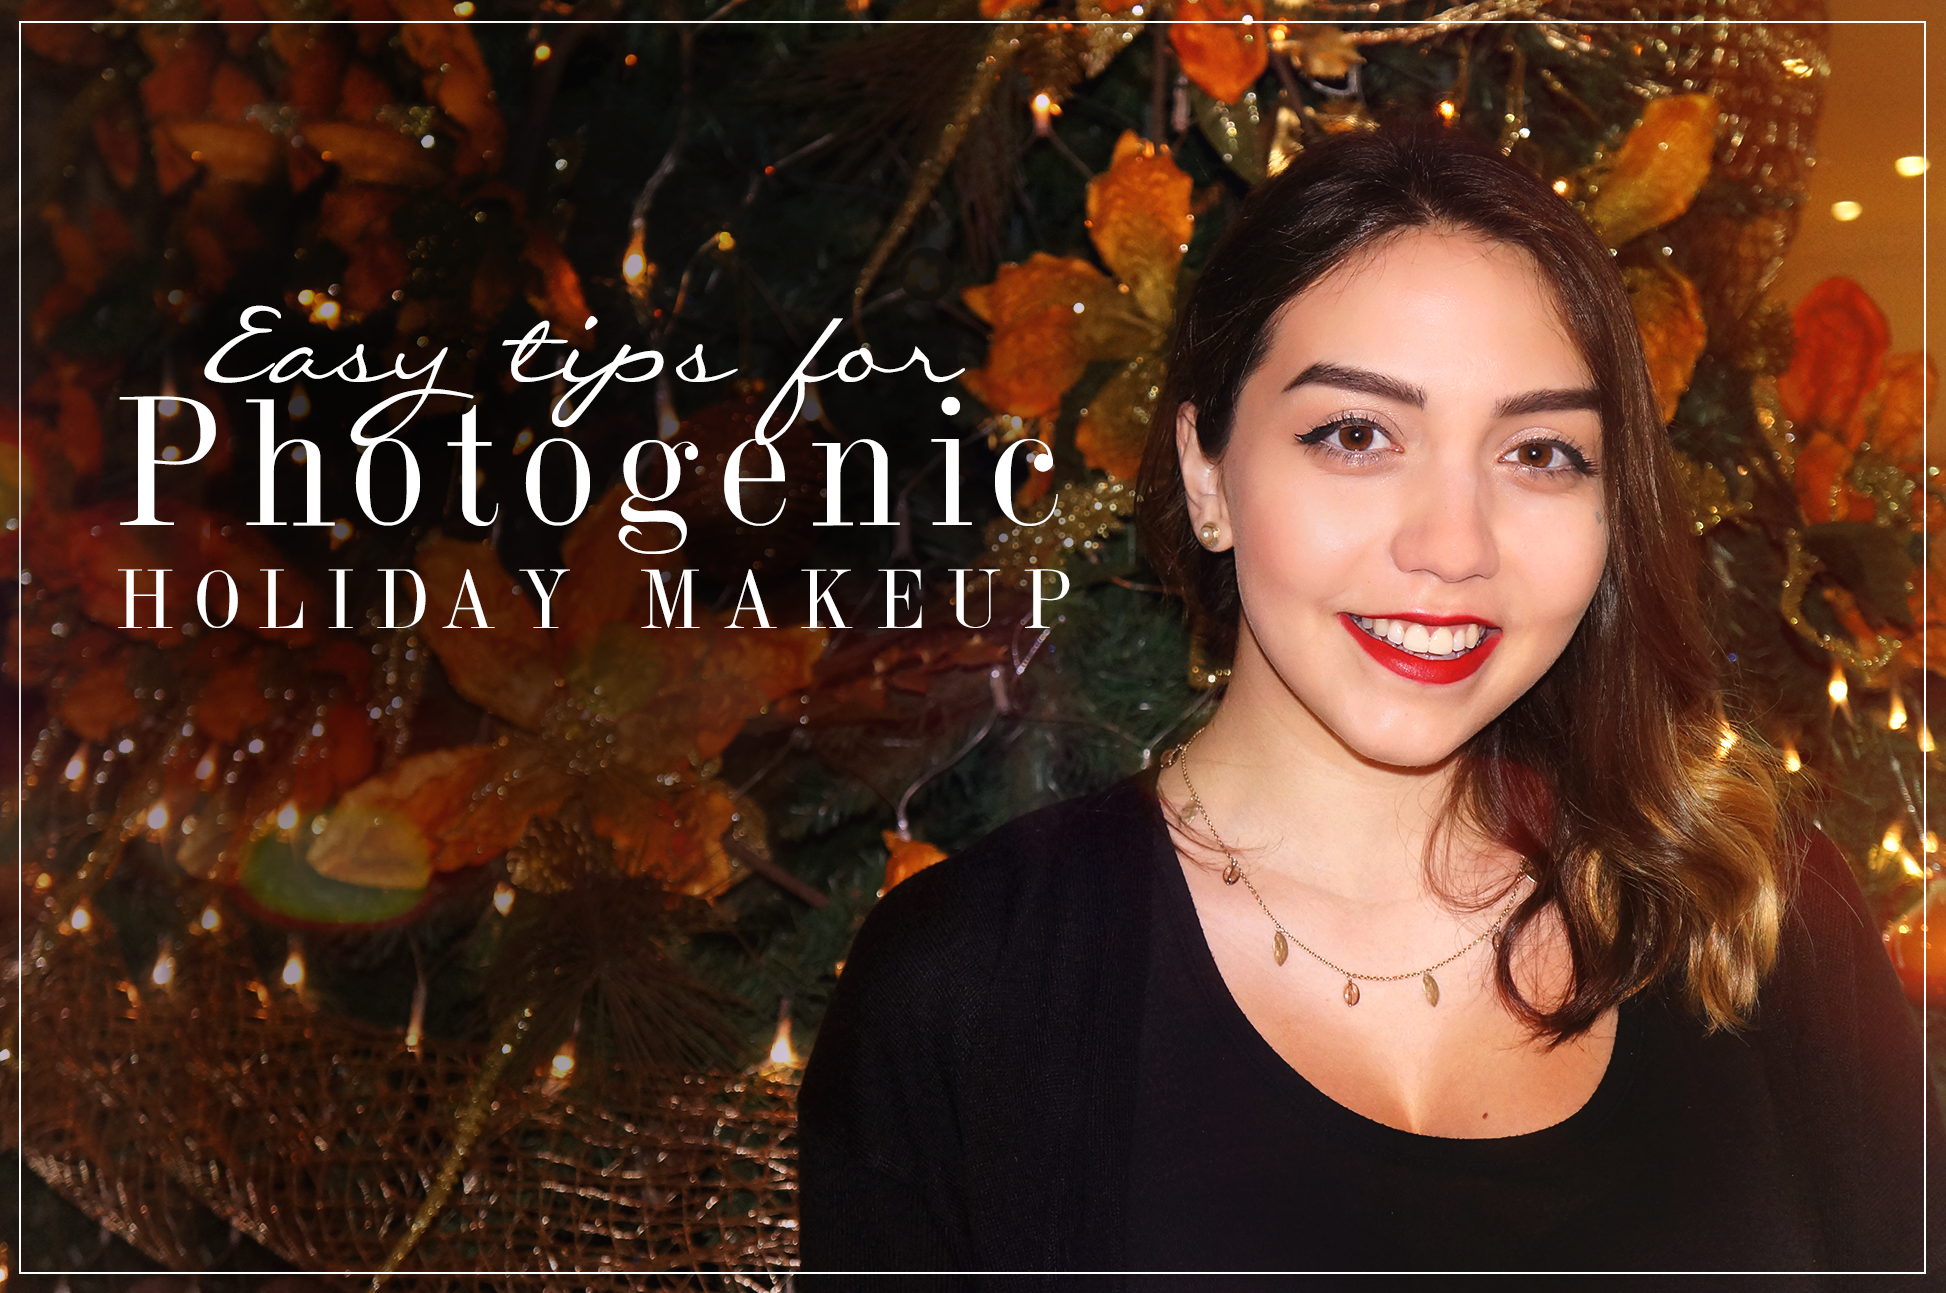 Photogenic holiday makeup